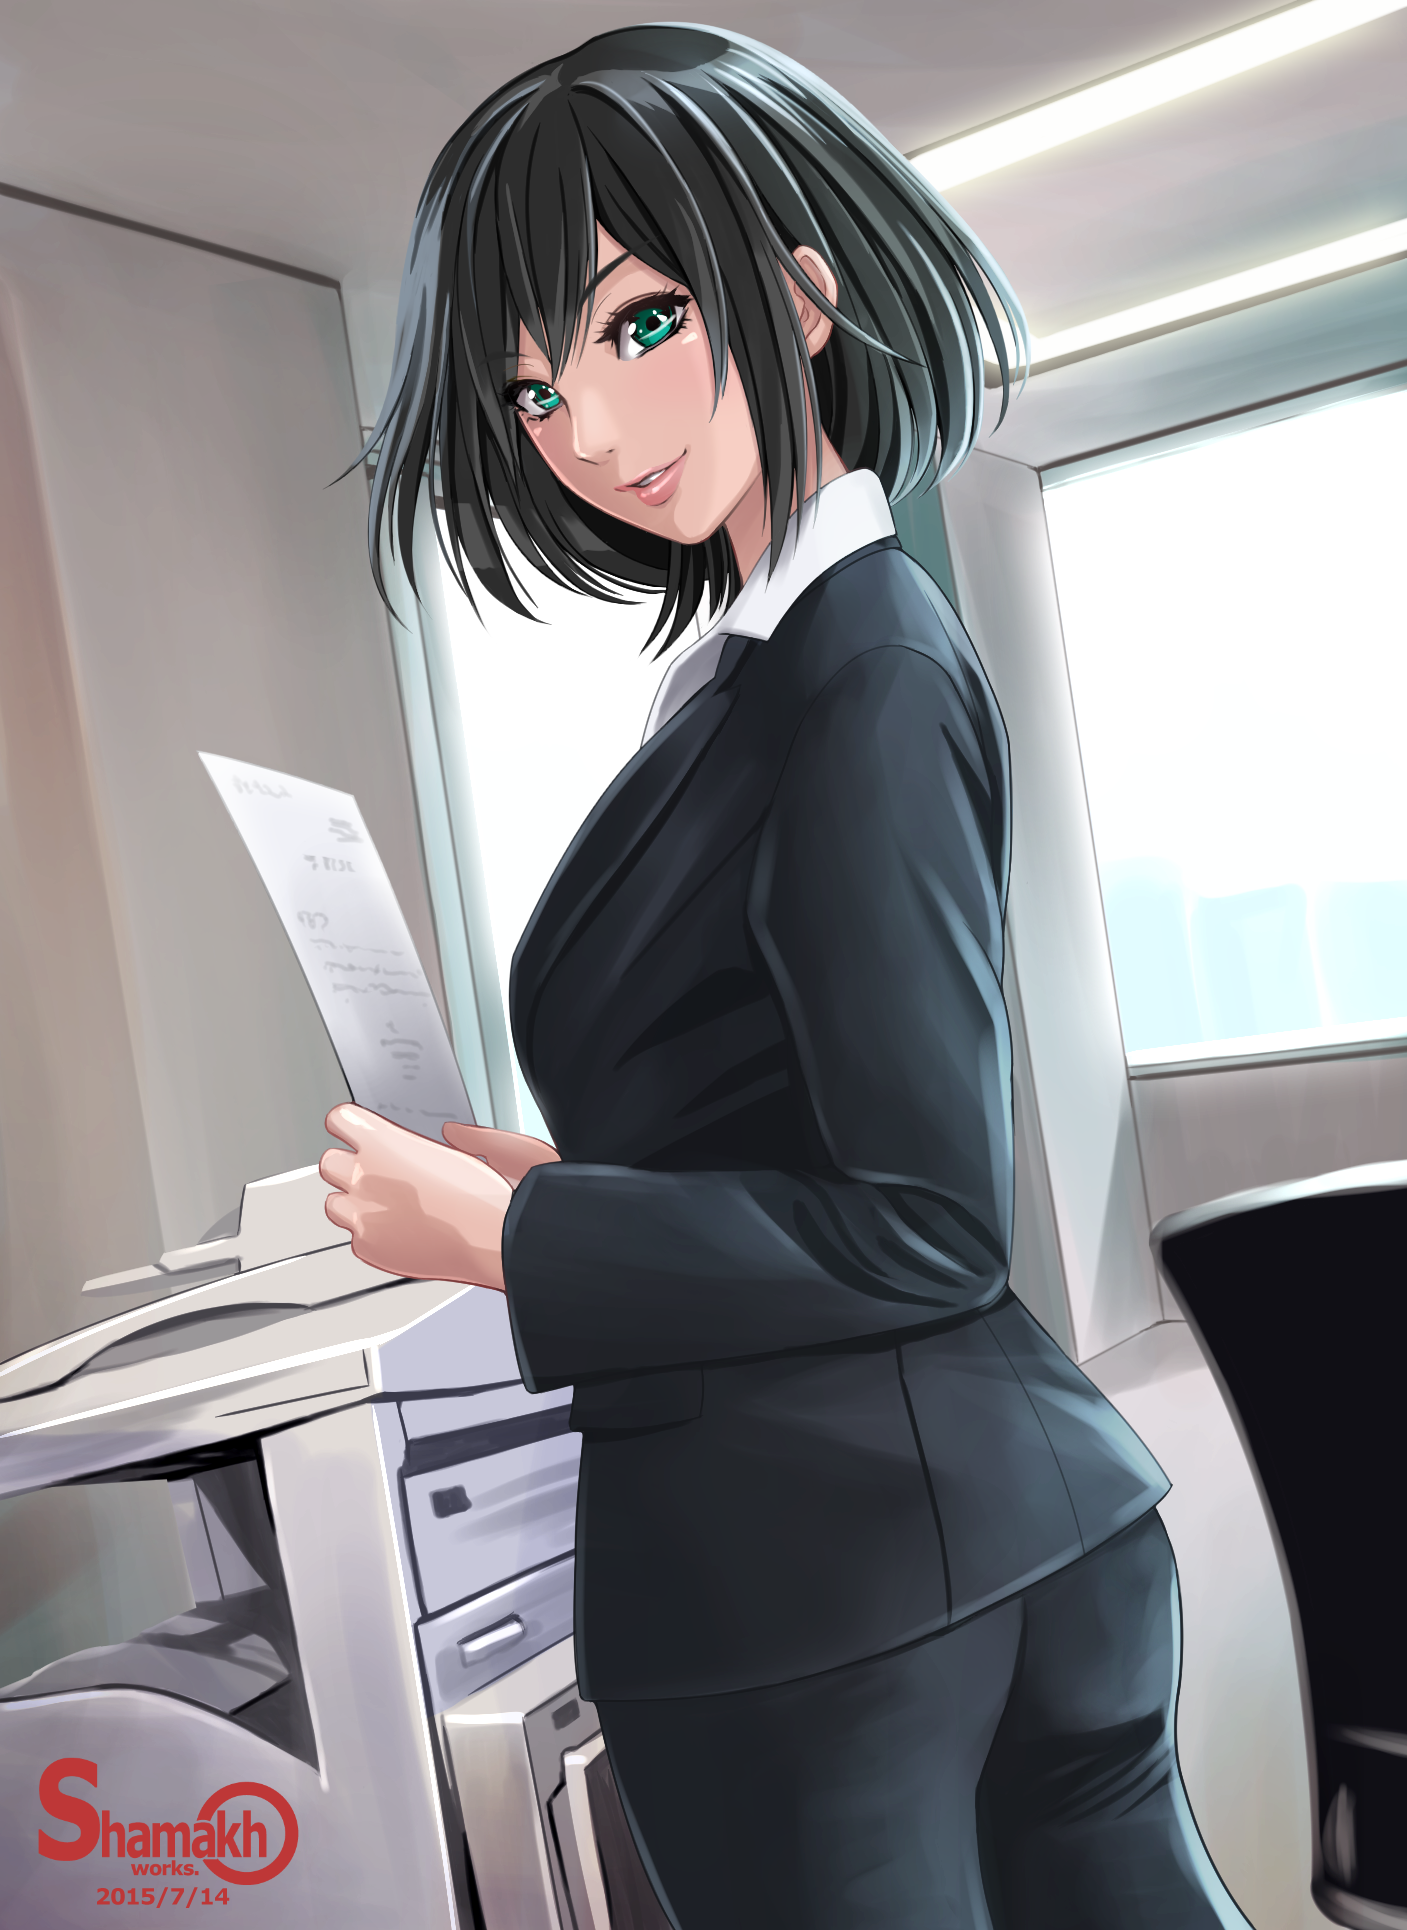 Anime 1407x1930 anime anime girls Pixiv office girl black hair shoulder length hair copier (Technology) aqua eyes office women standing suits 2015 (Year)